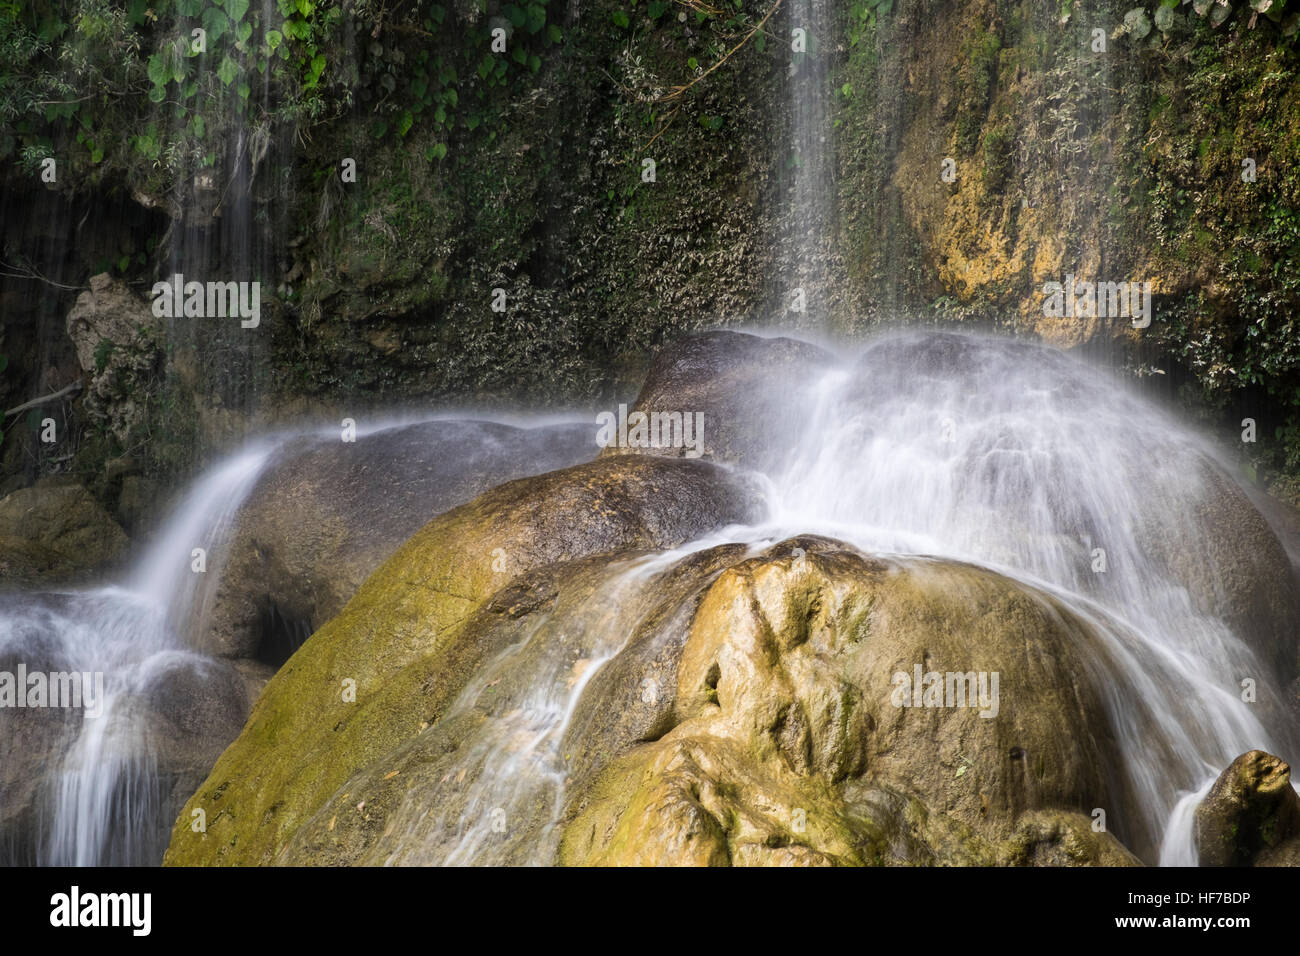 Base of the waterfall, Salto del Arco Iris, Soroa, Cuba Stock Photo